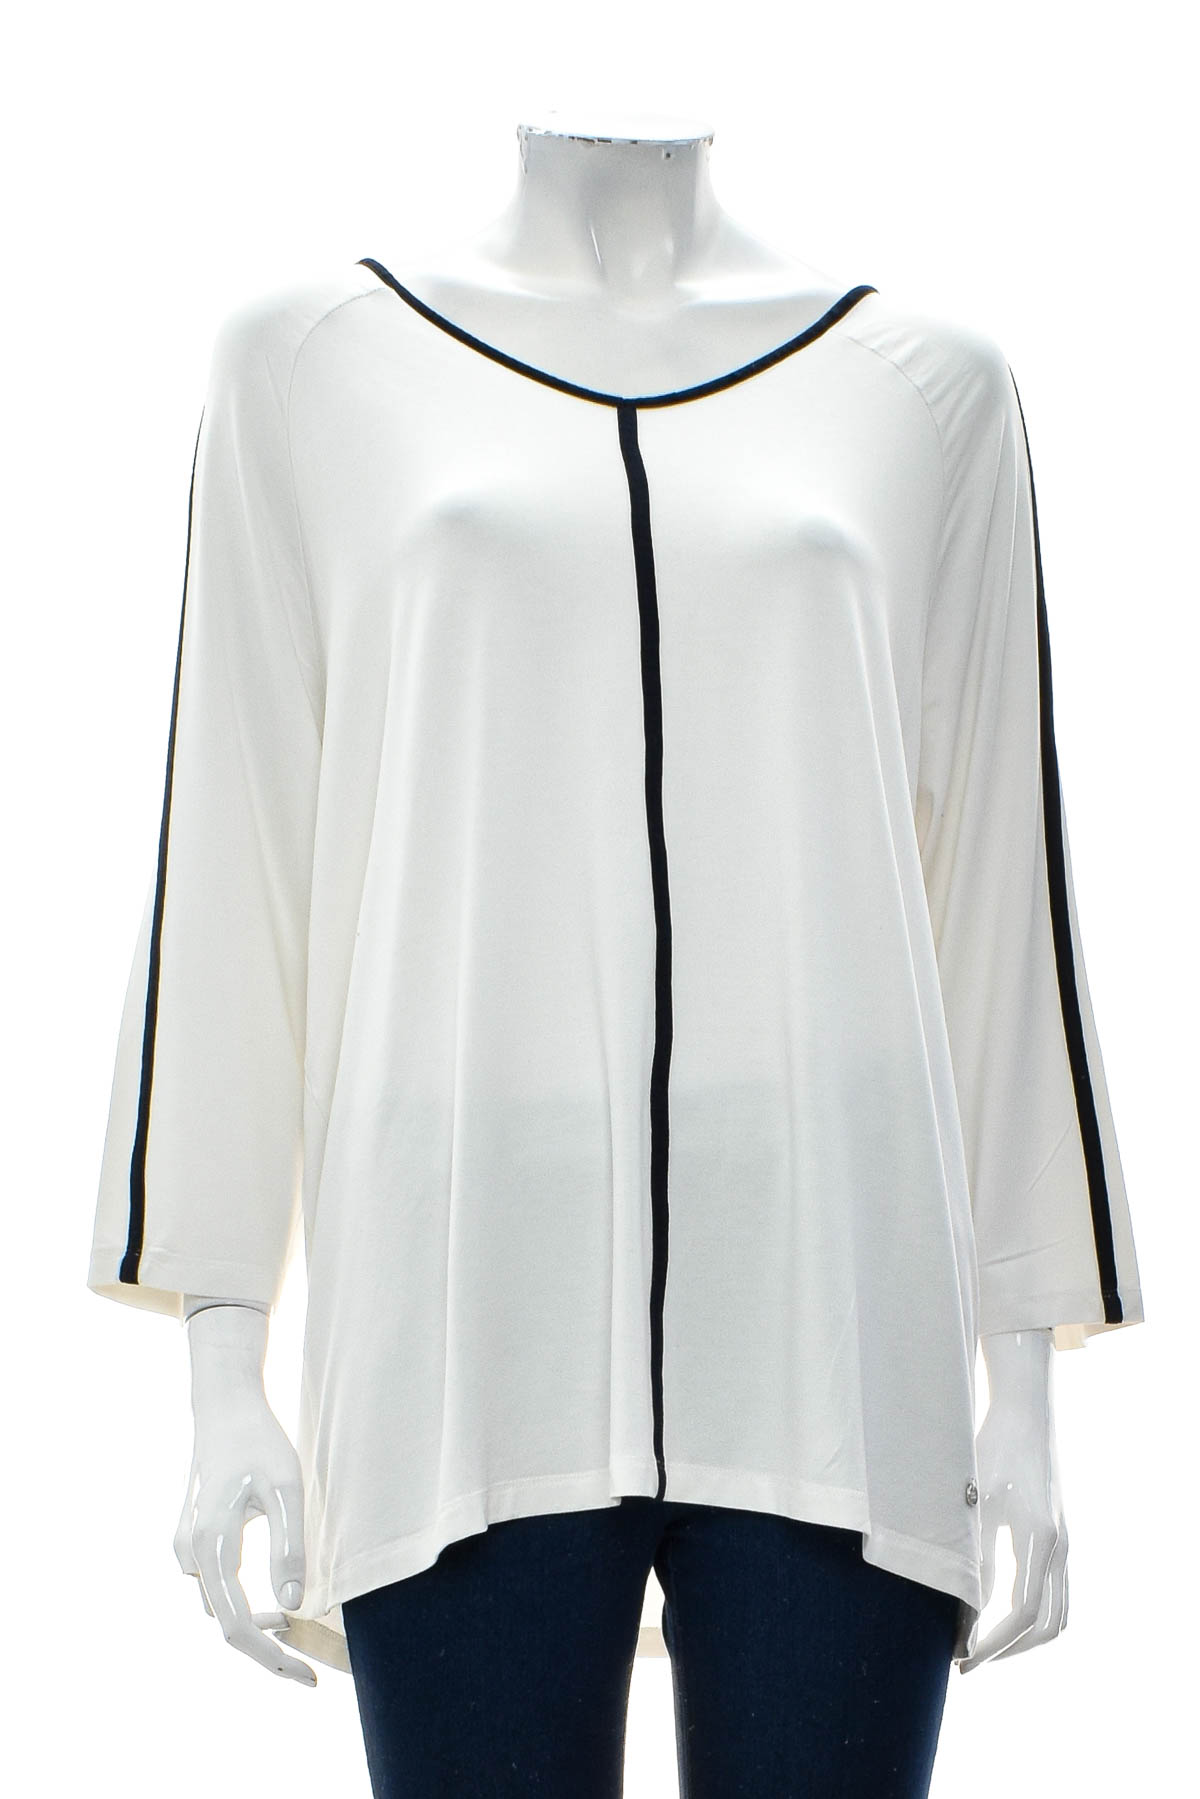 Women's blouse - Gina Laura - 0